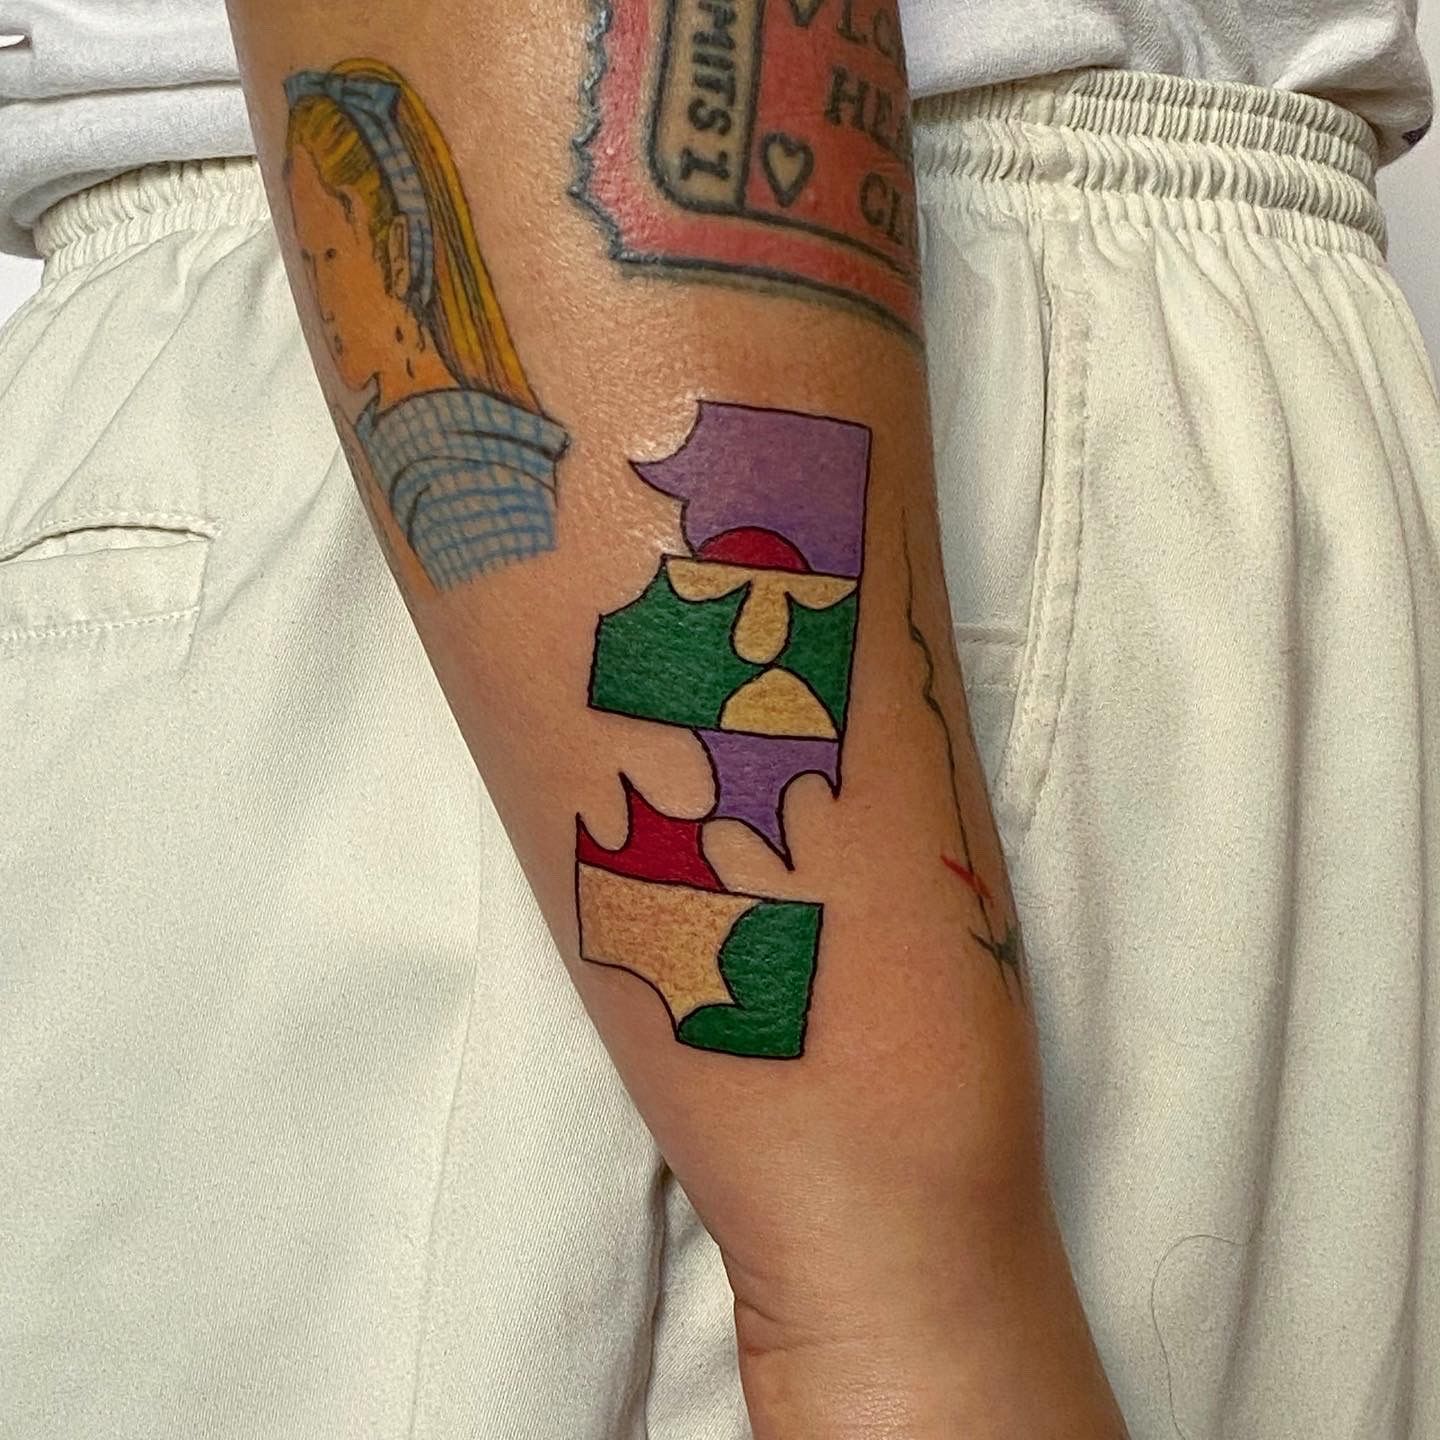 Mac Millers 42 Tattoos  Their Meanings  Body Art Guru  Mac miller Mac  miller tattoos American rappers